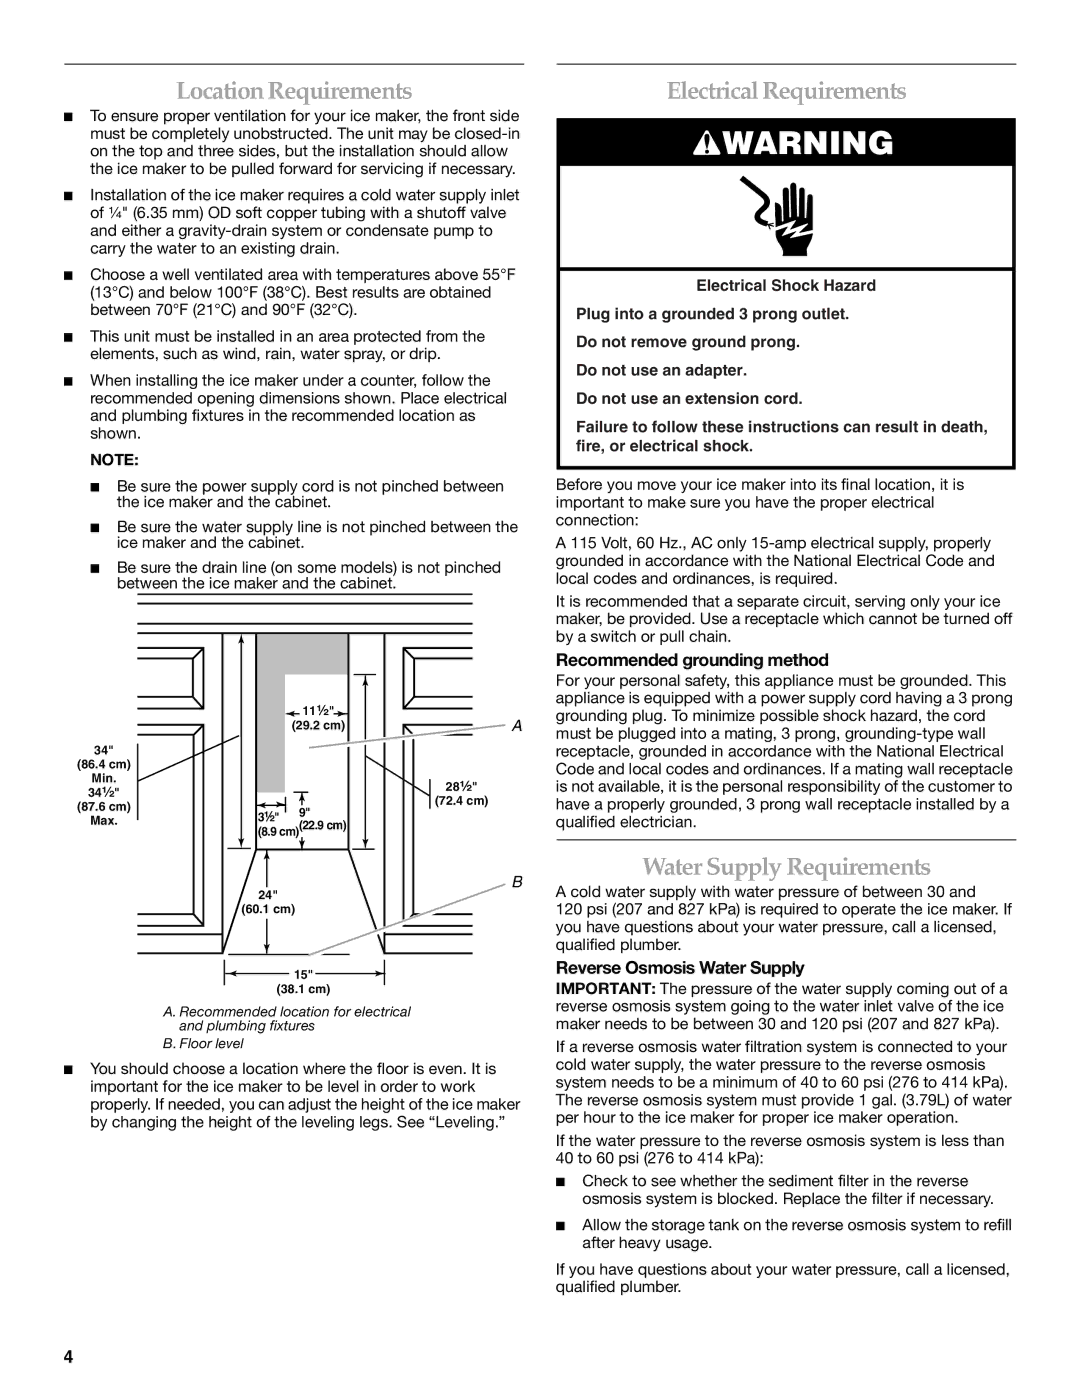 KitchenAid 2313684A manual Location Requirements, Electrical Requirements, Water Supply Requirements 